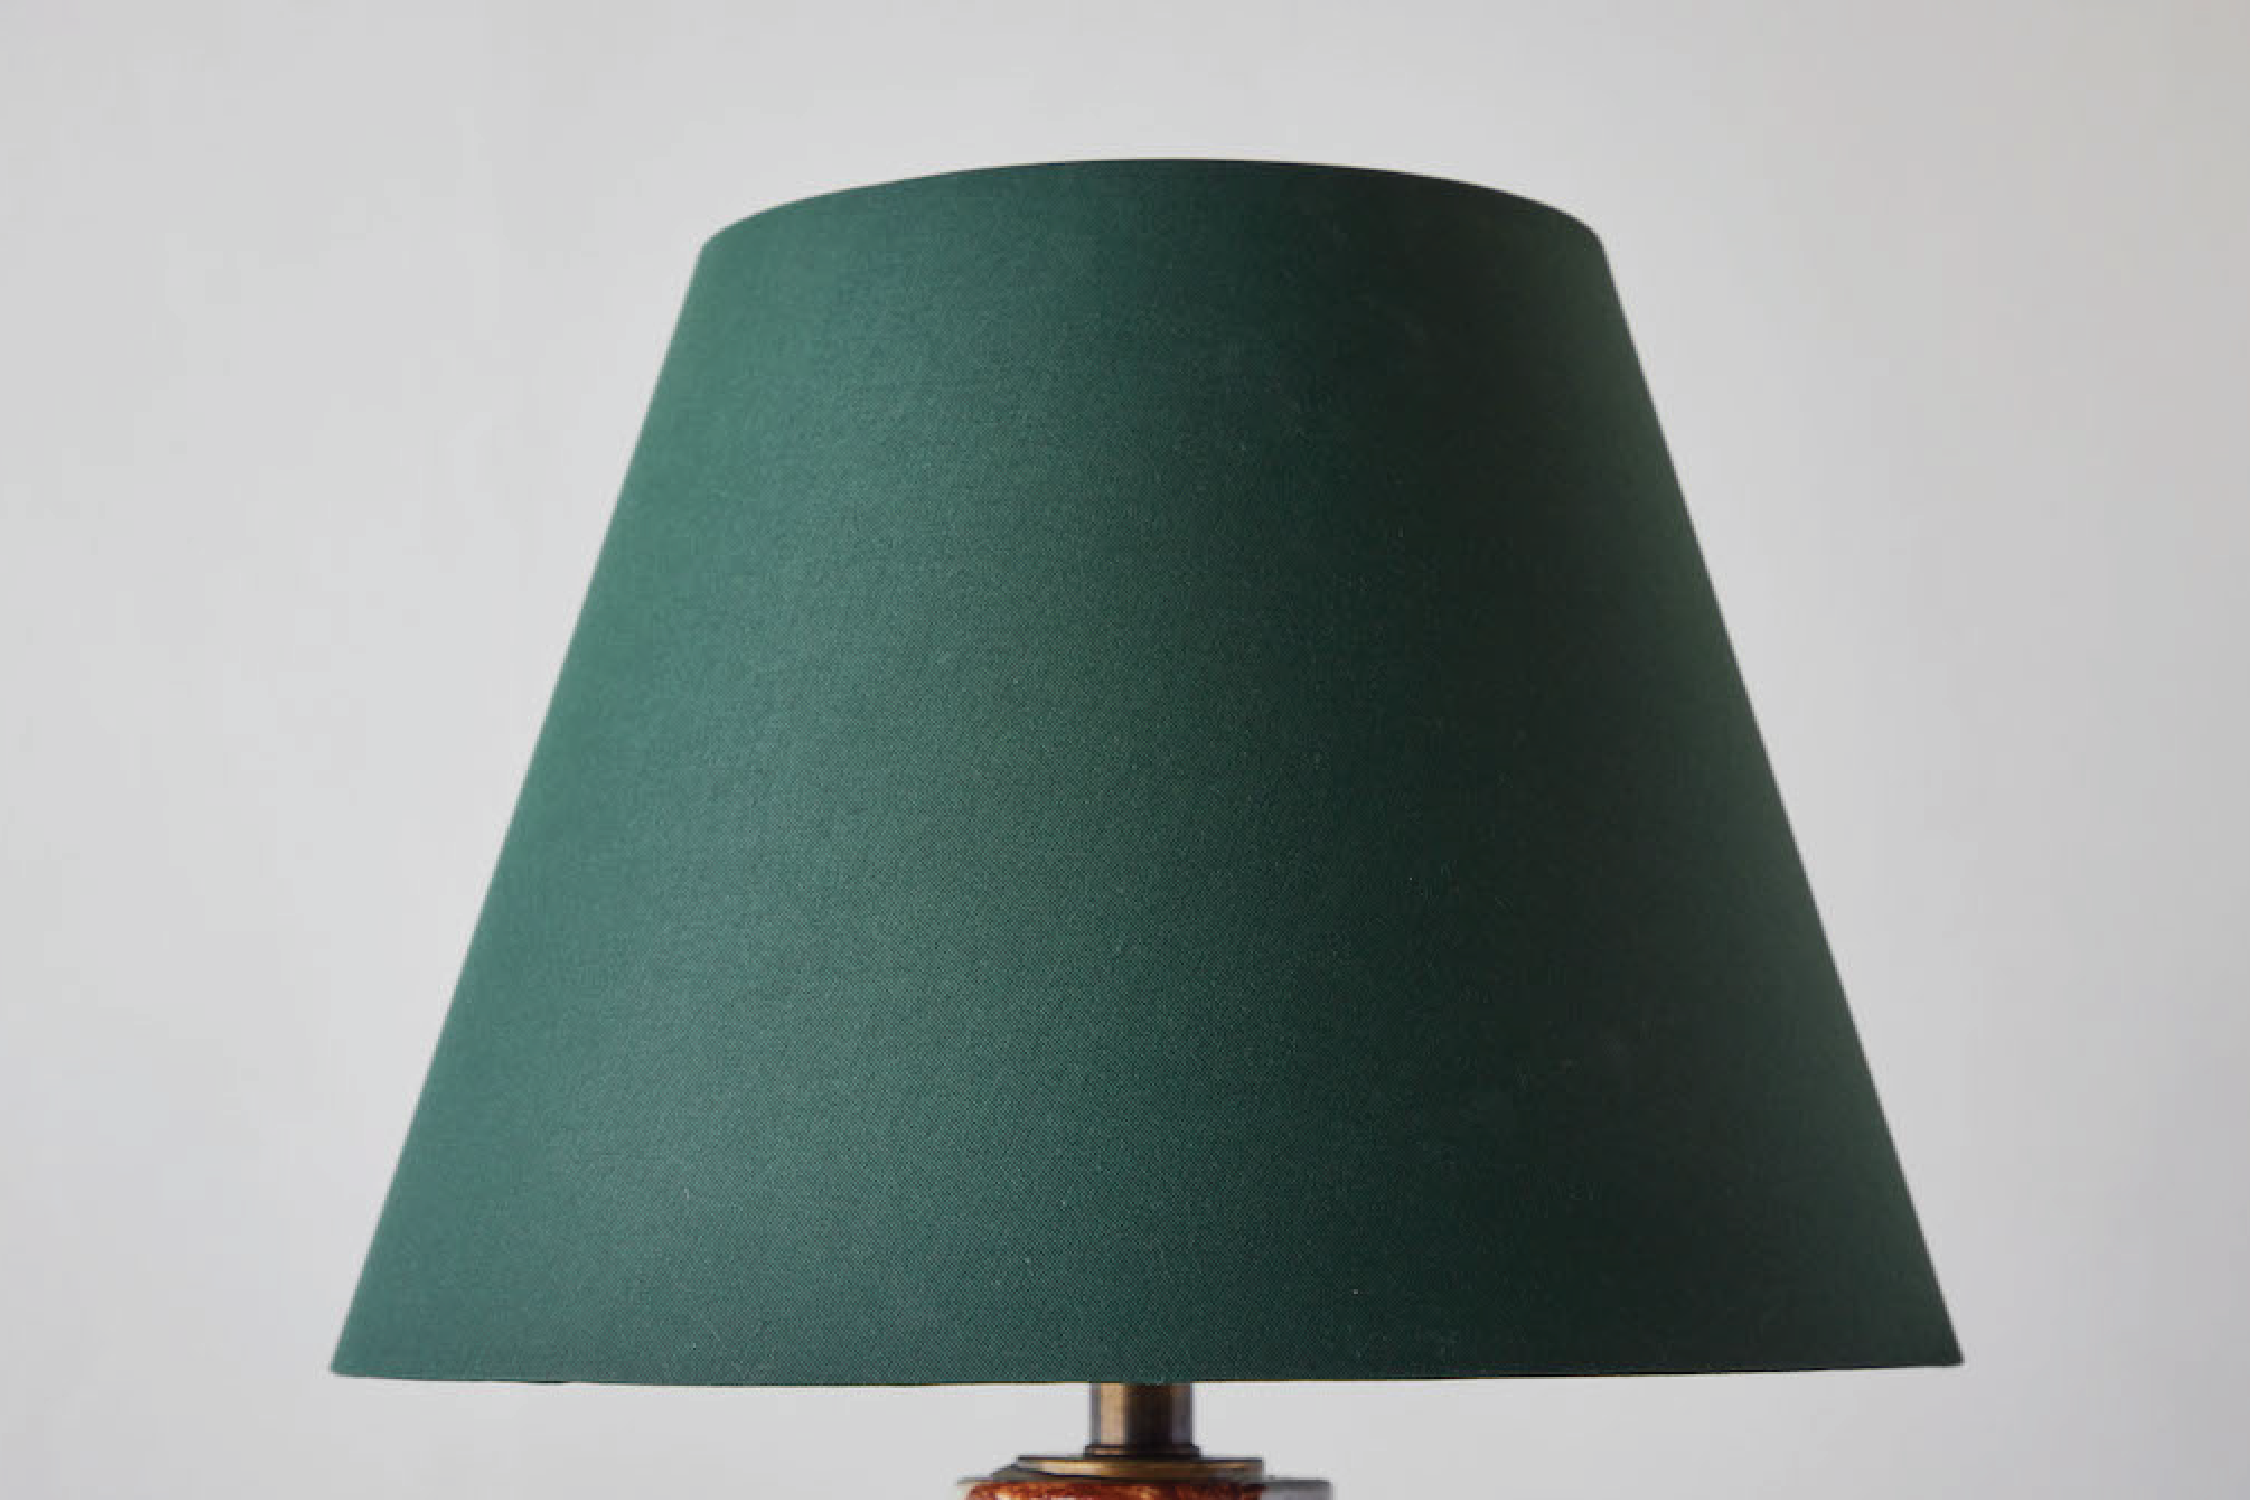 Rebekah Miles, Green Floral Table Lamp - In Stock